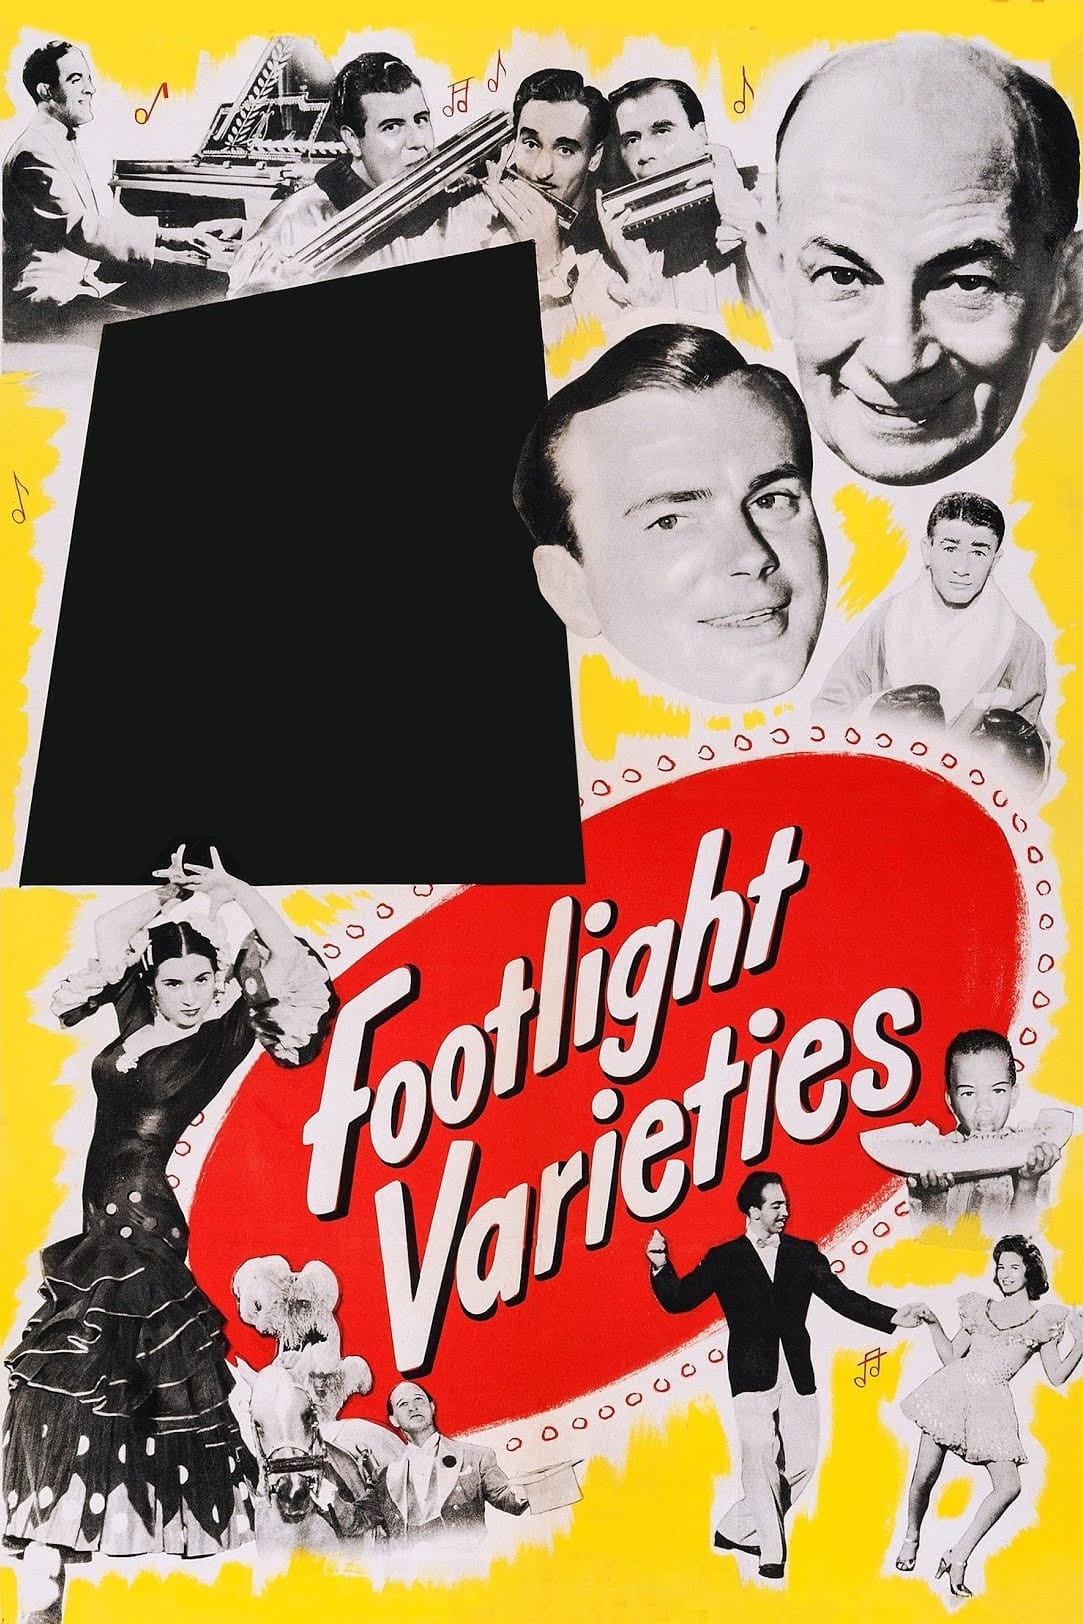 Footlight Varieties (1951)